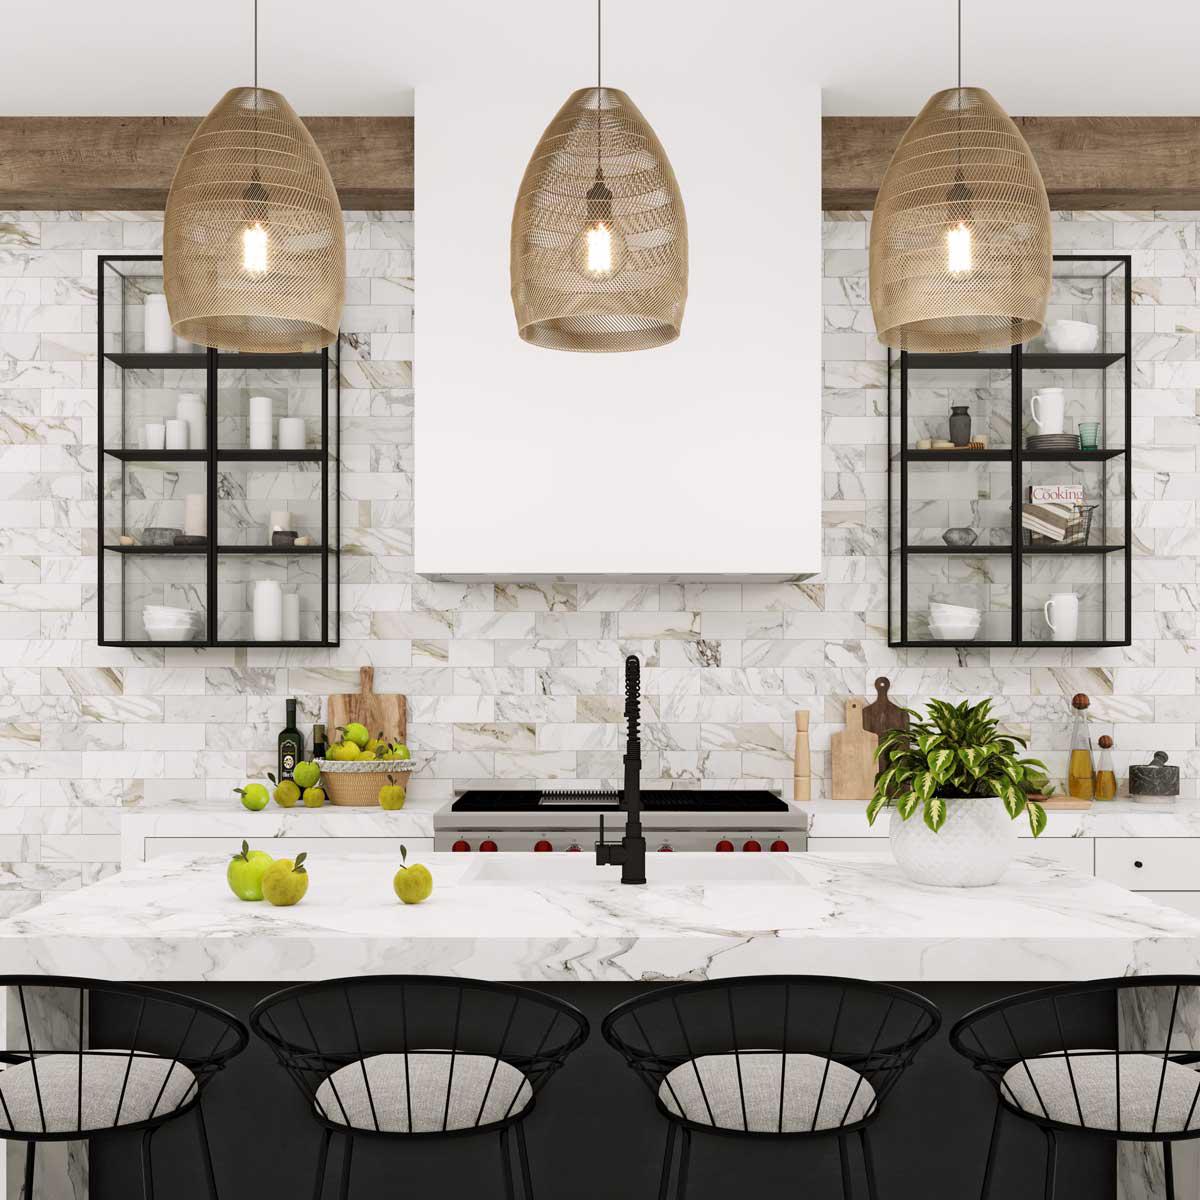 Calacatta Gold Marble Subway Tile Kitchen Backsplash with hanging Woven Pendant Lights